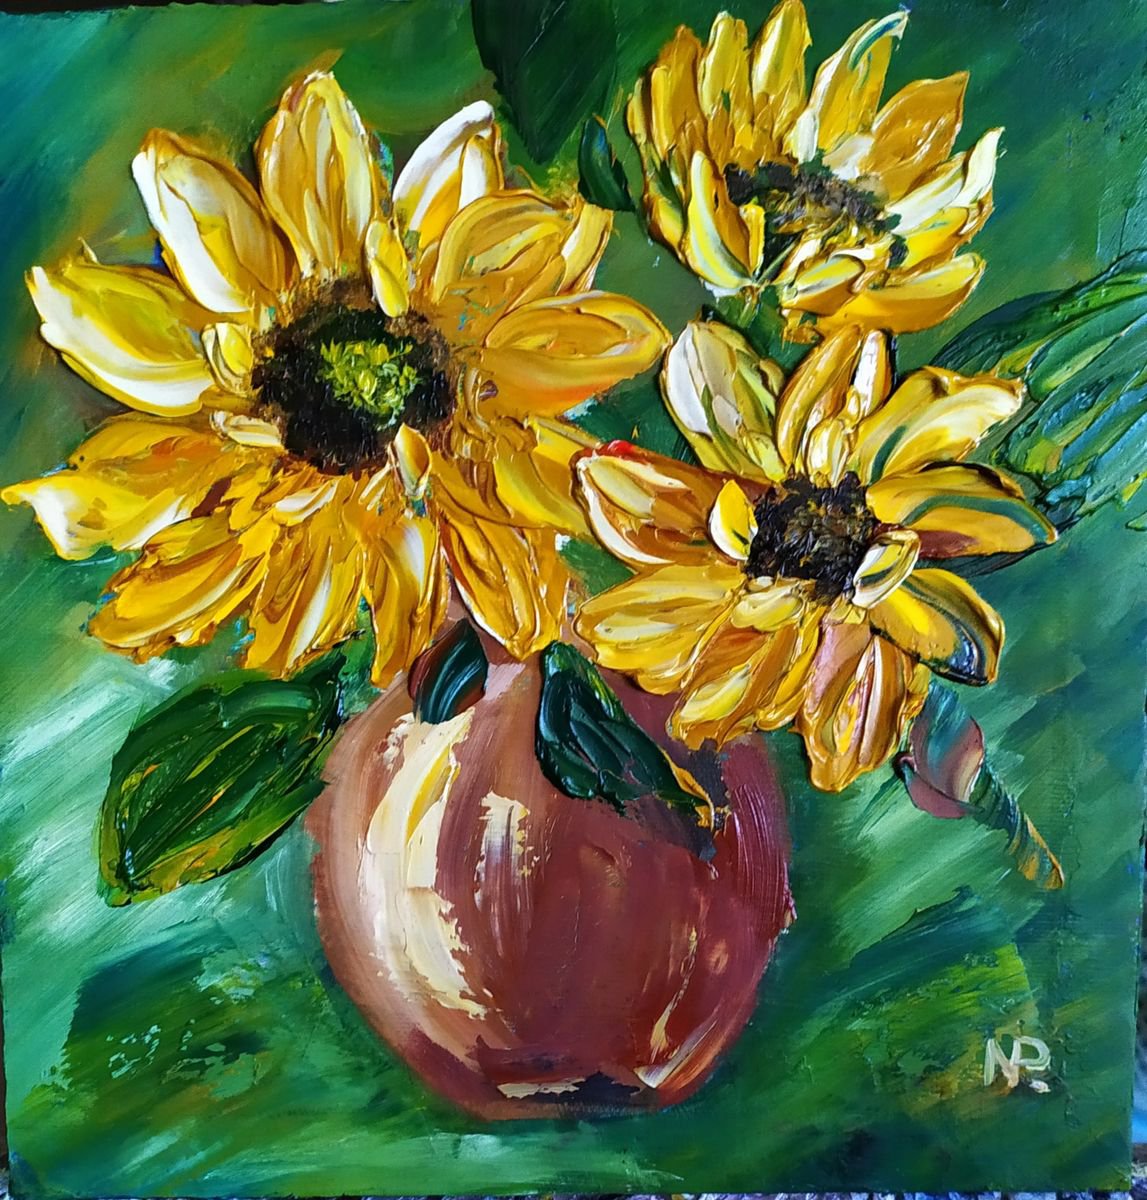 Sunflowers inspired by Van Gogh, original floral | Artfinder